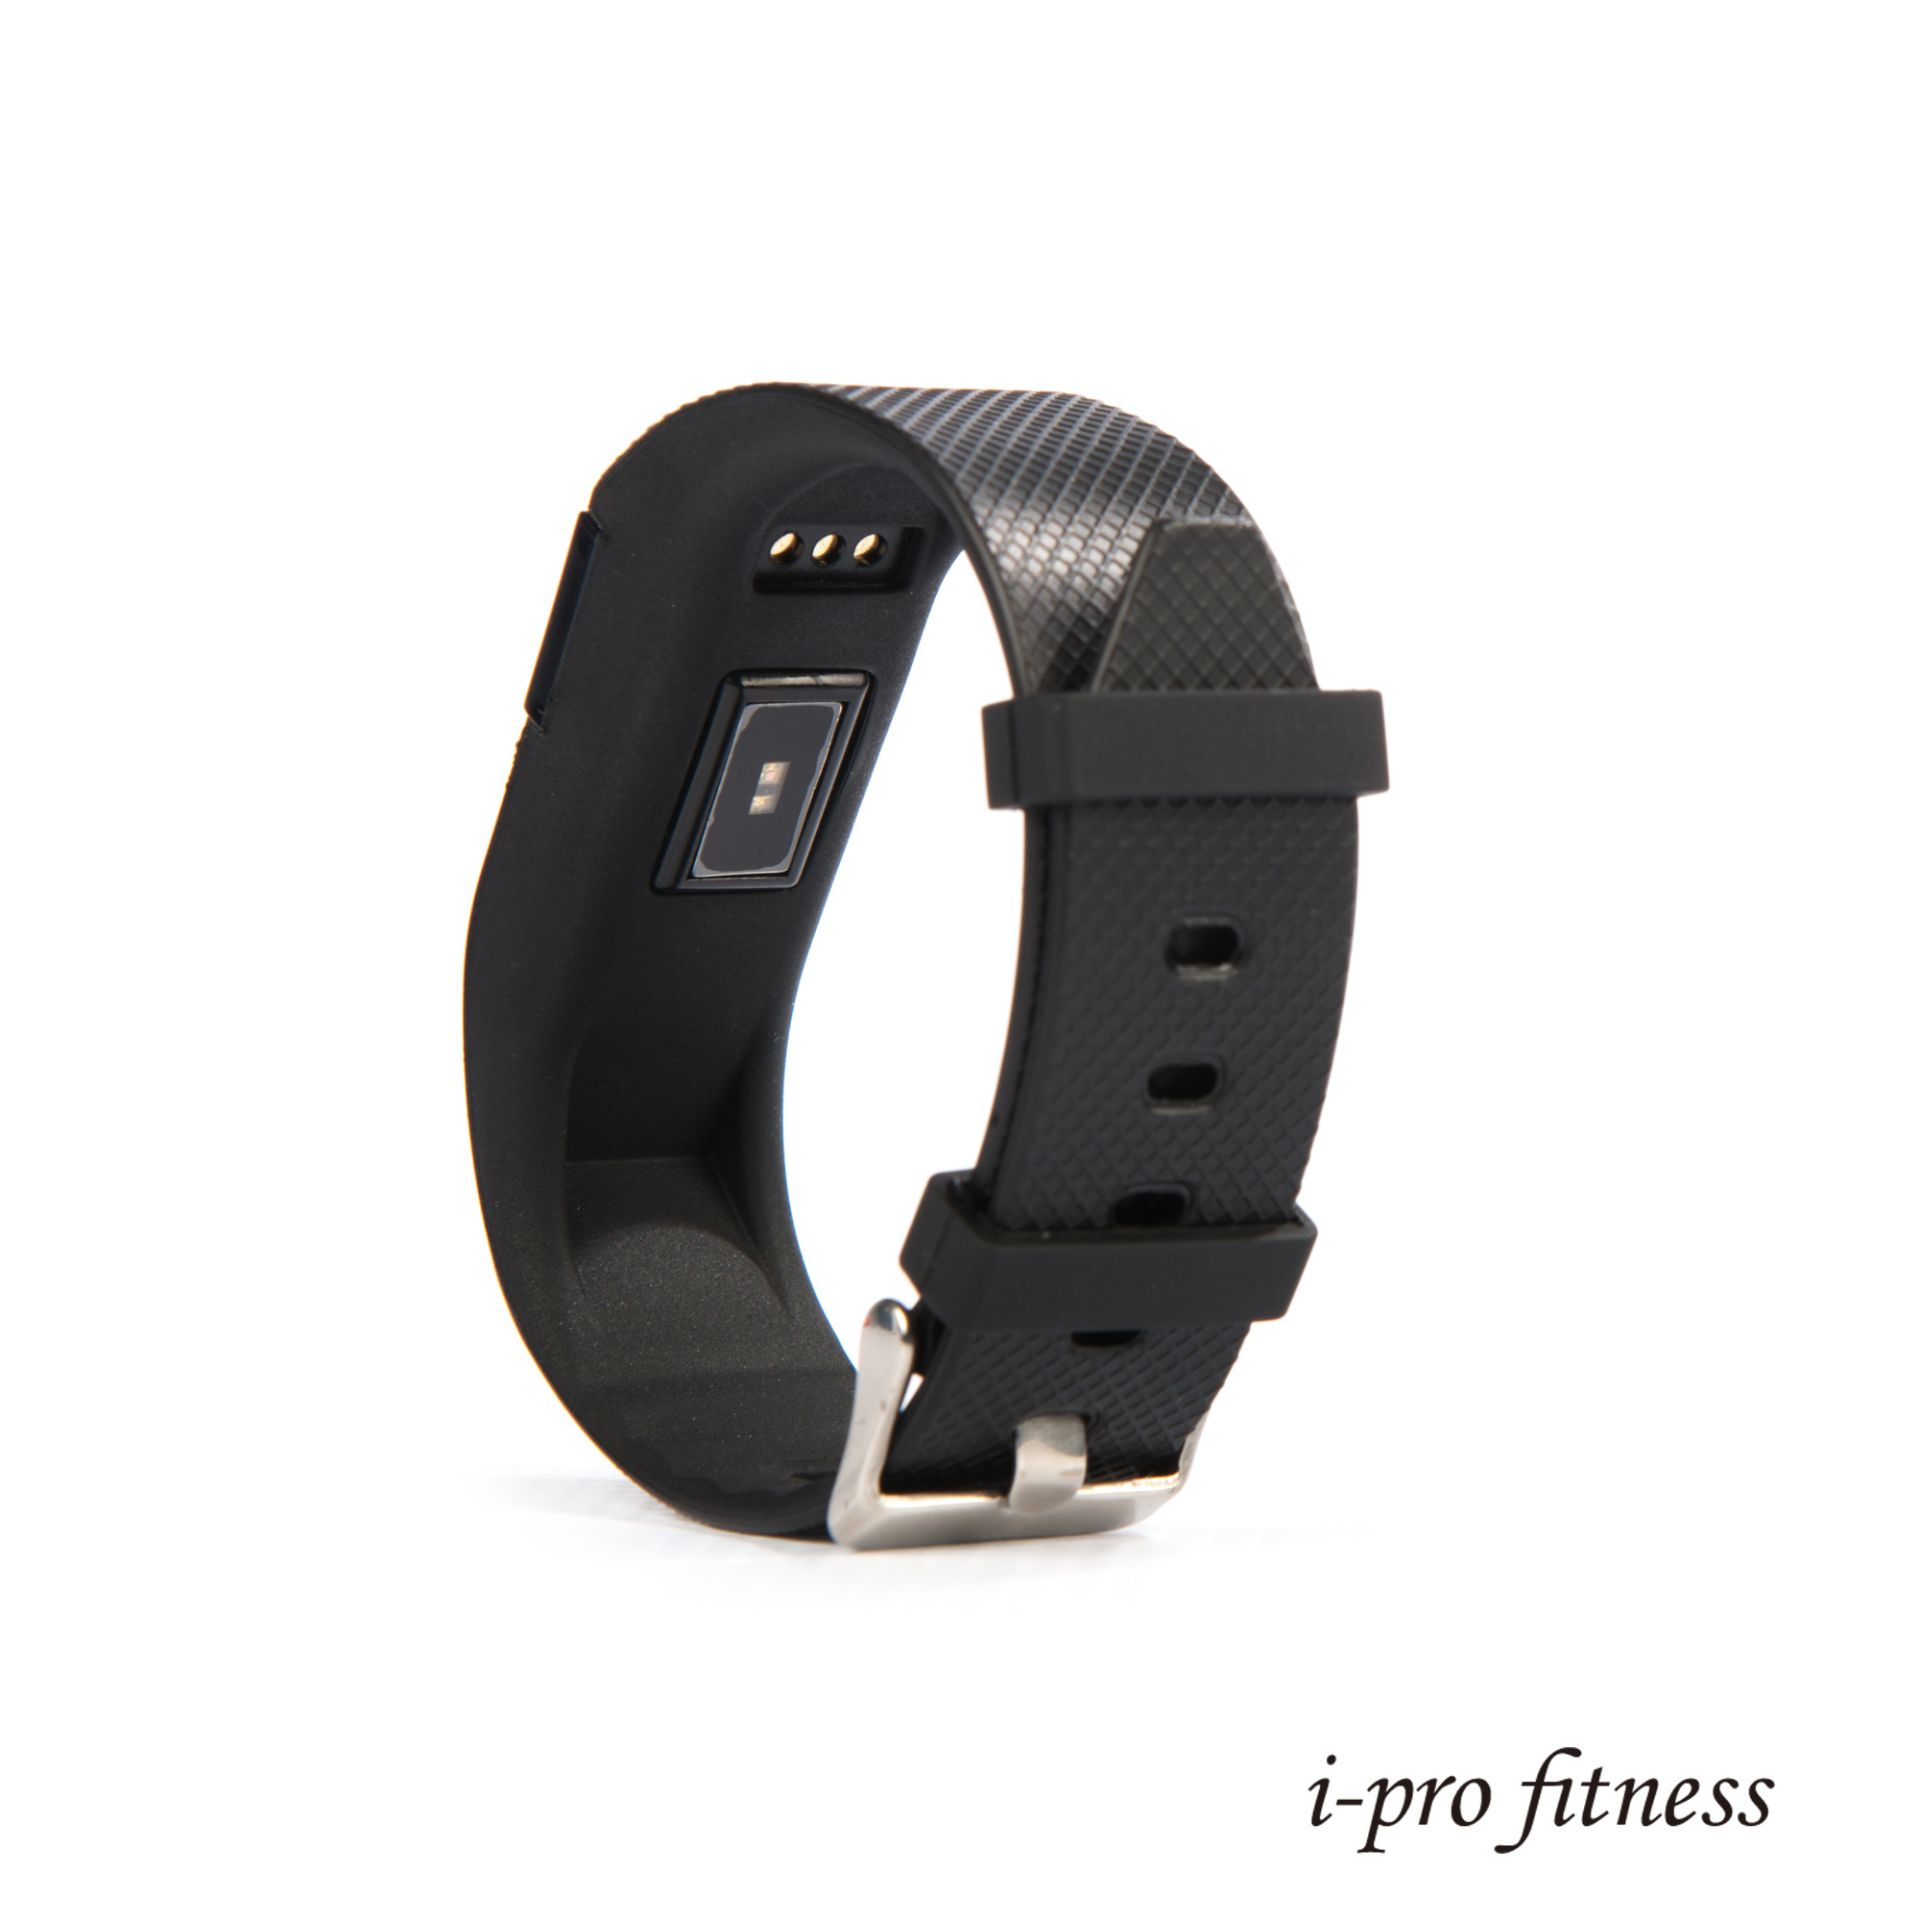 Fitness Tracker i-pro fitness, Bluetooth 4.0 Sports Smart Bracelet, Heart Rate Monitor & Pedometer. - Image 6 of 8